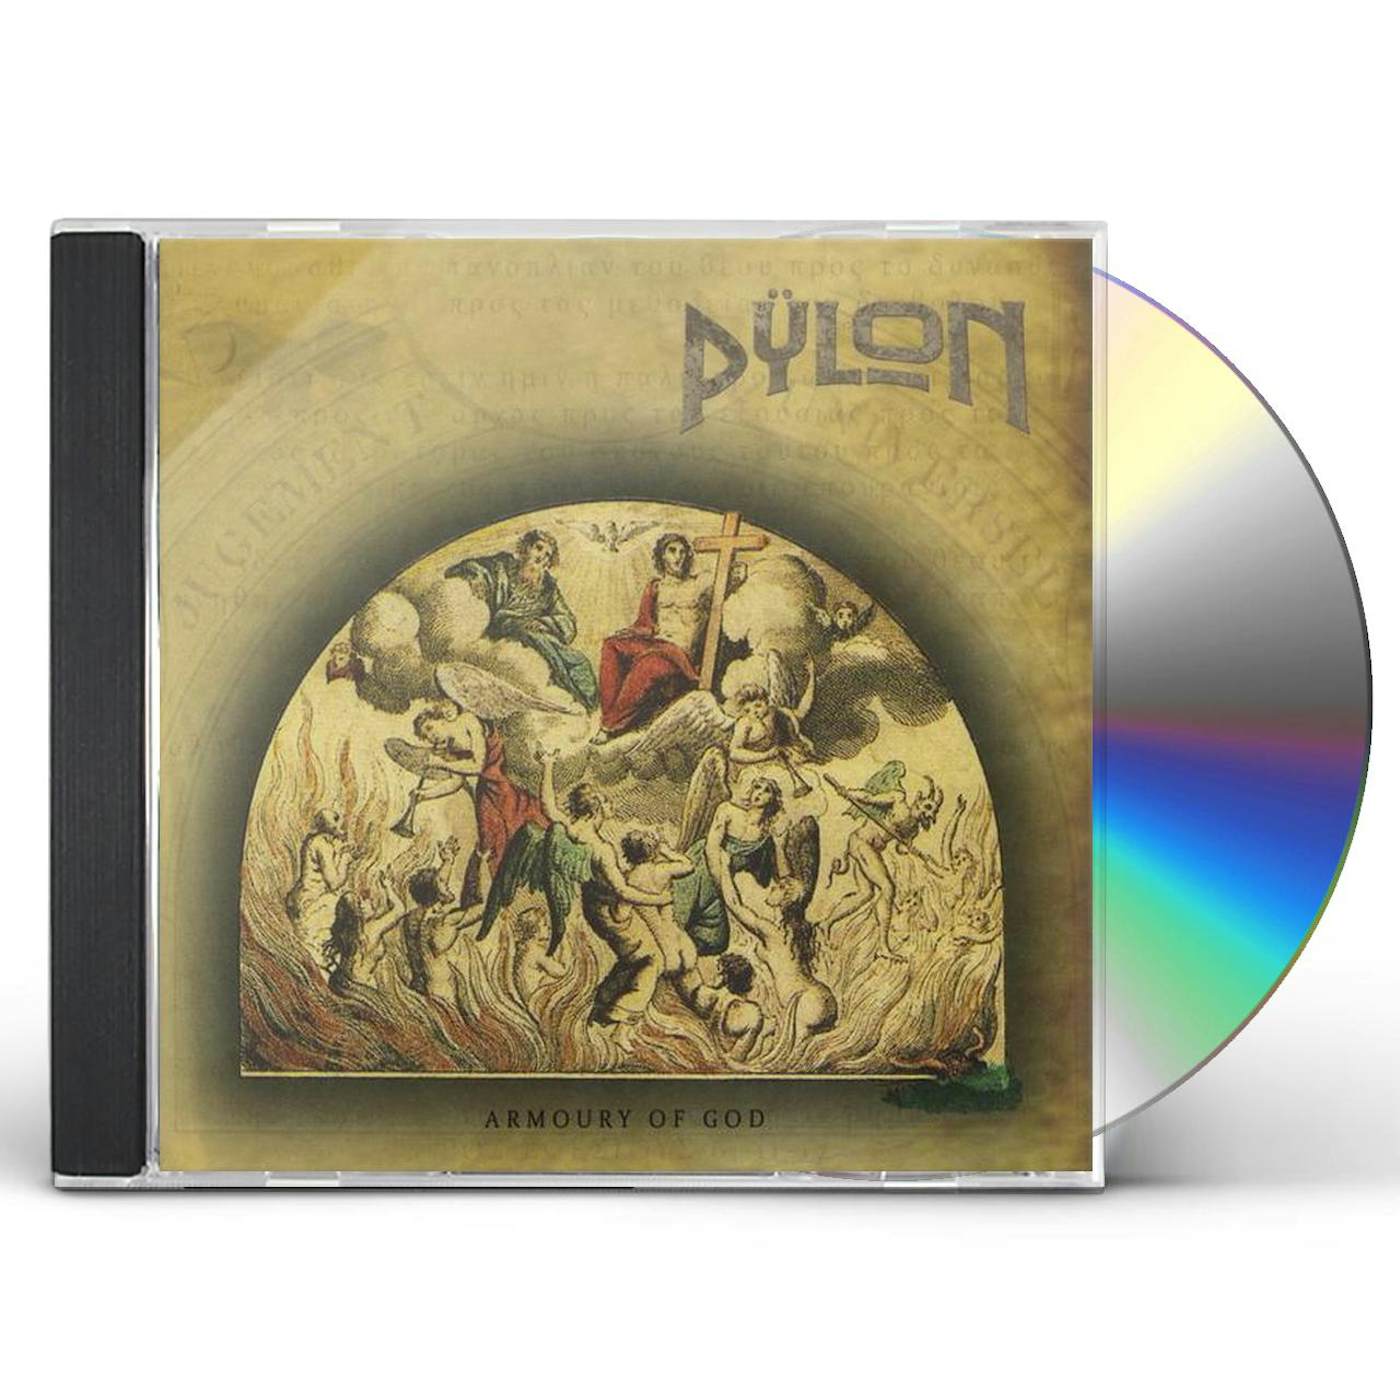 Pylon ARMOURY OF GOD CD